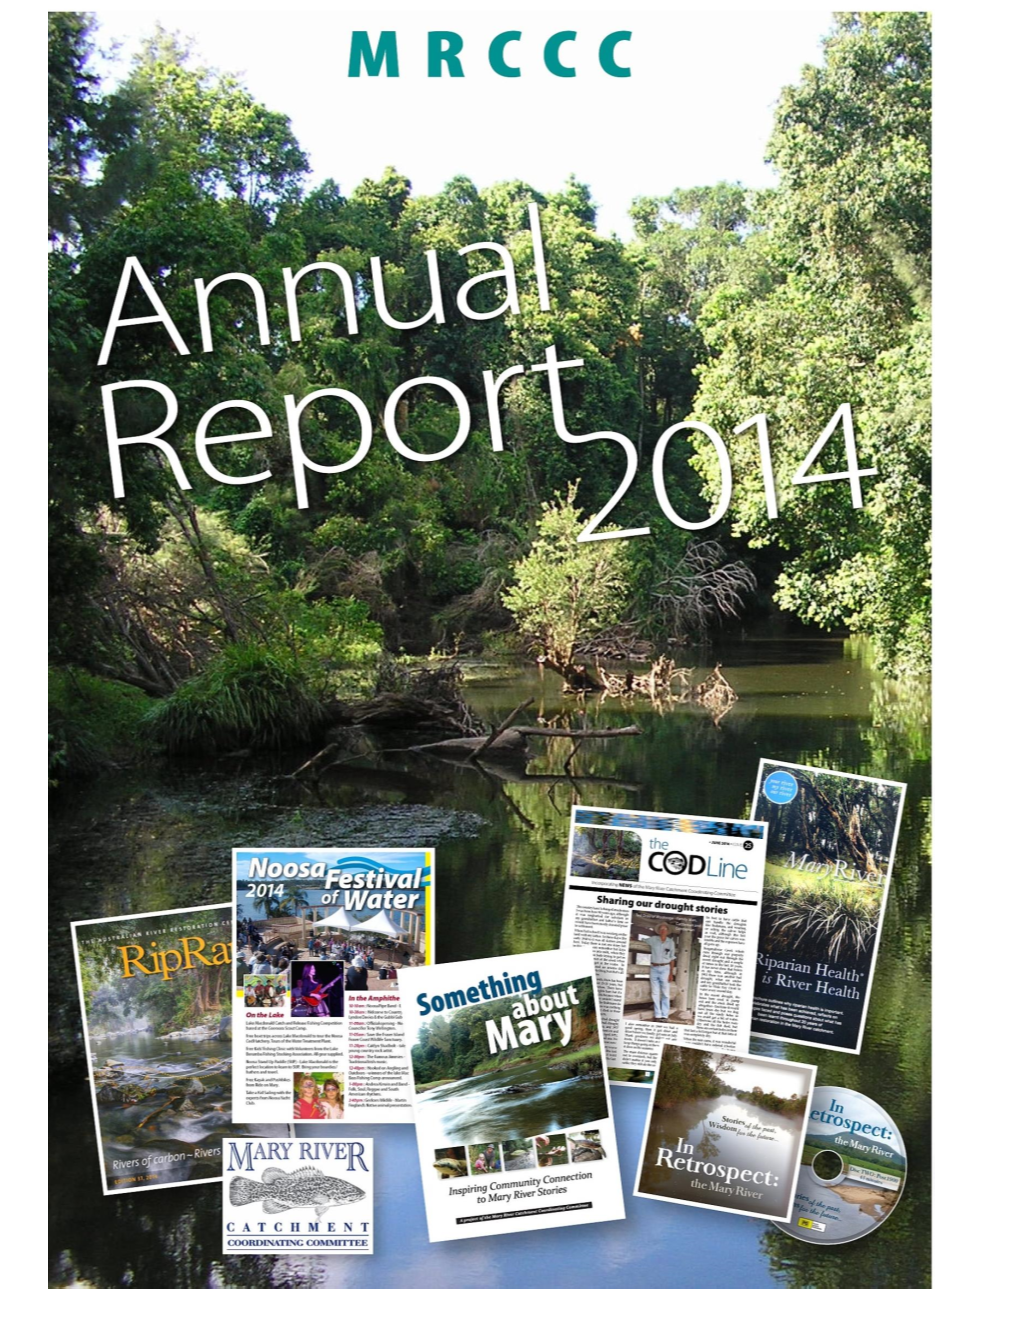 MRCCC 2014 Annual Report